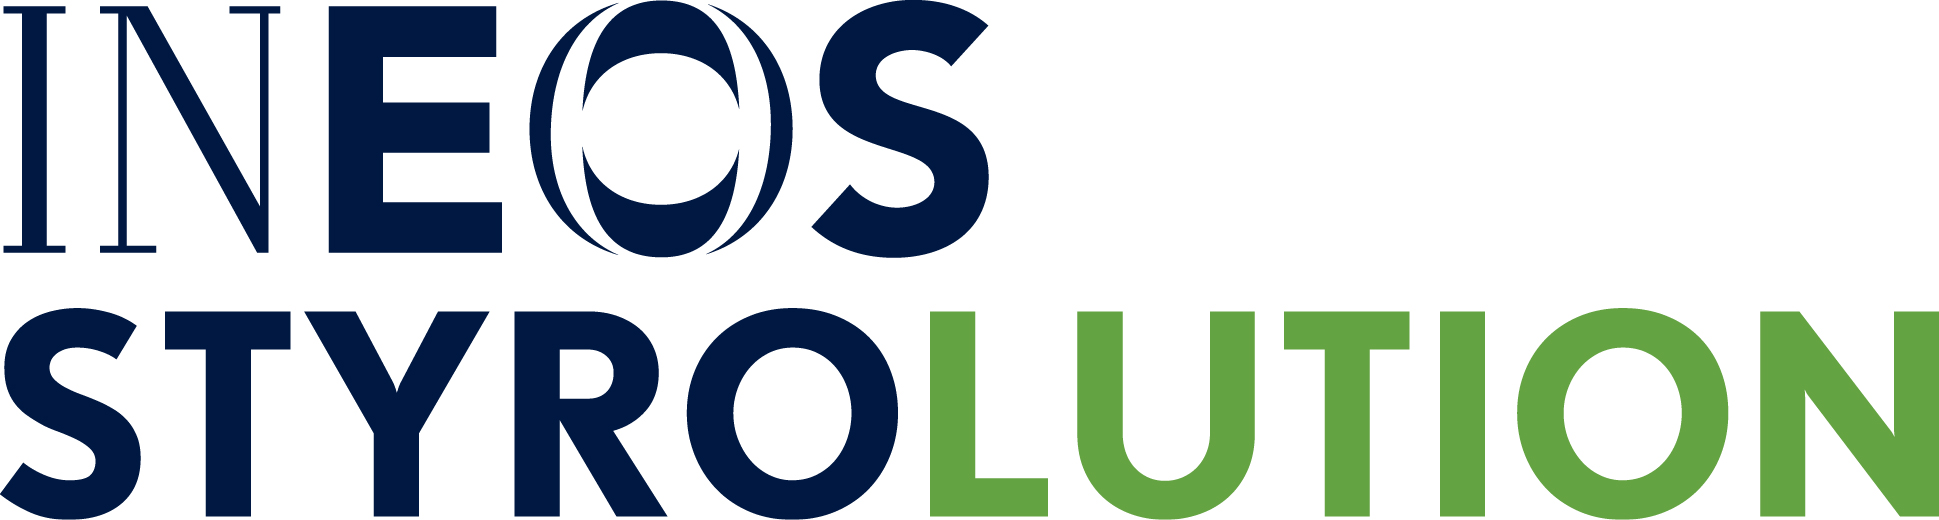 INEOS_Styrolution_logo